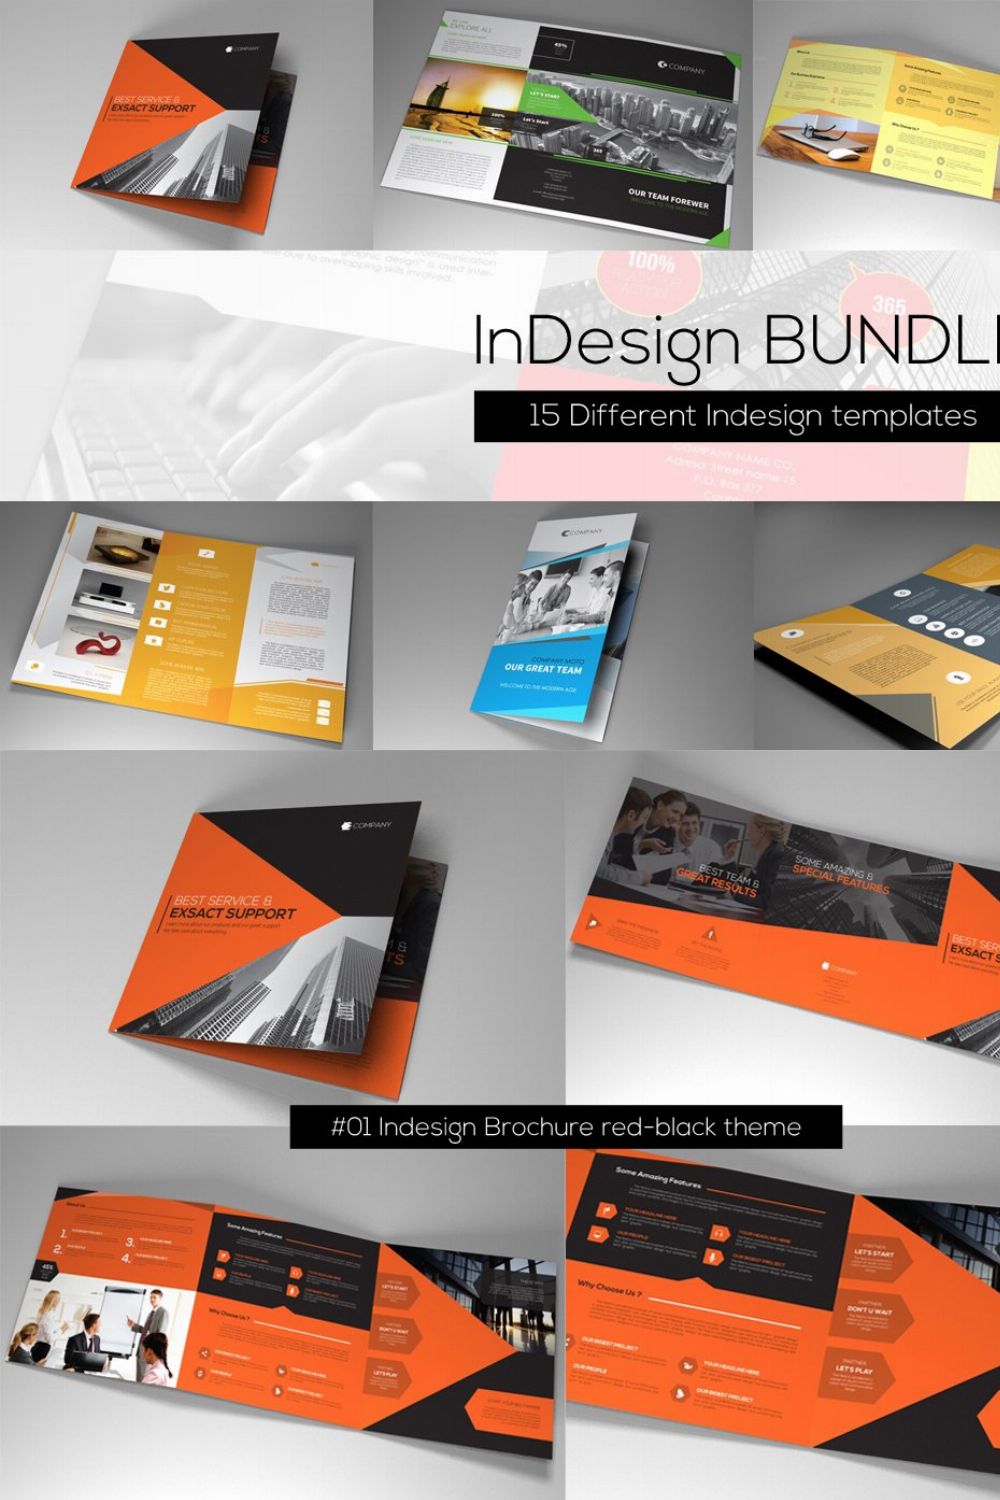 Indesign Bundle - 15 templates pinterest preview image.